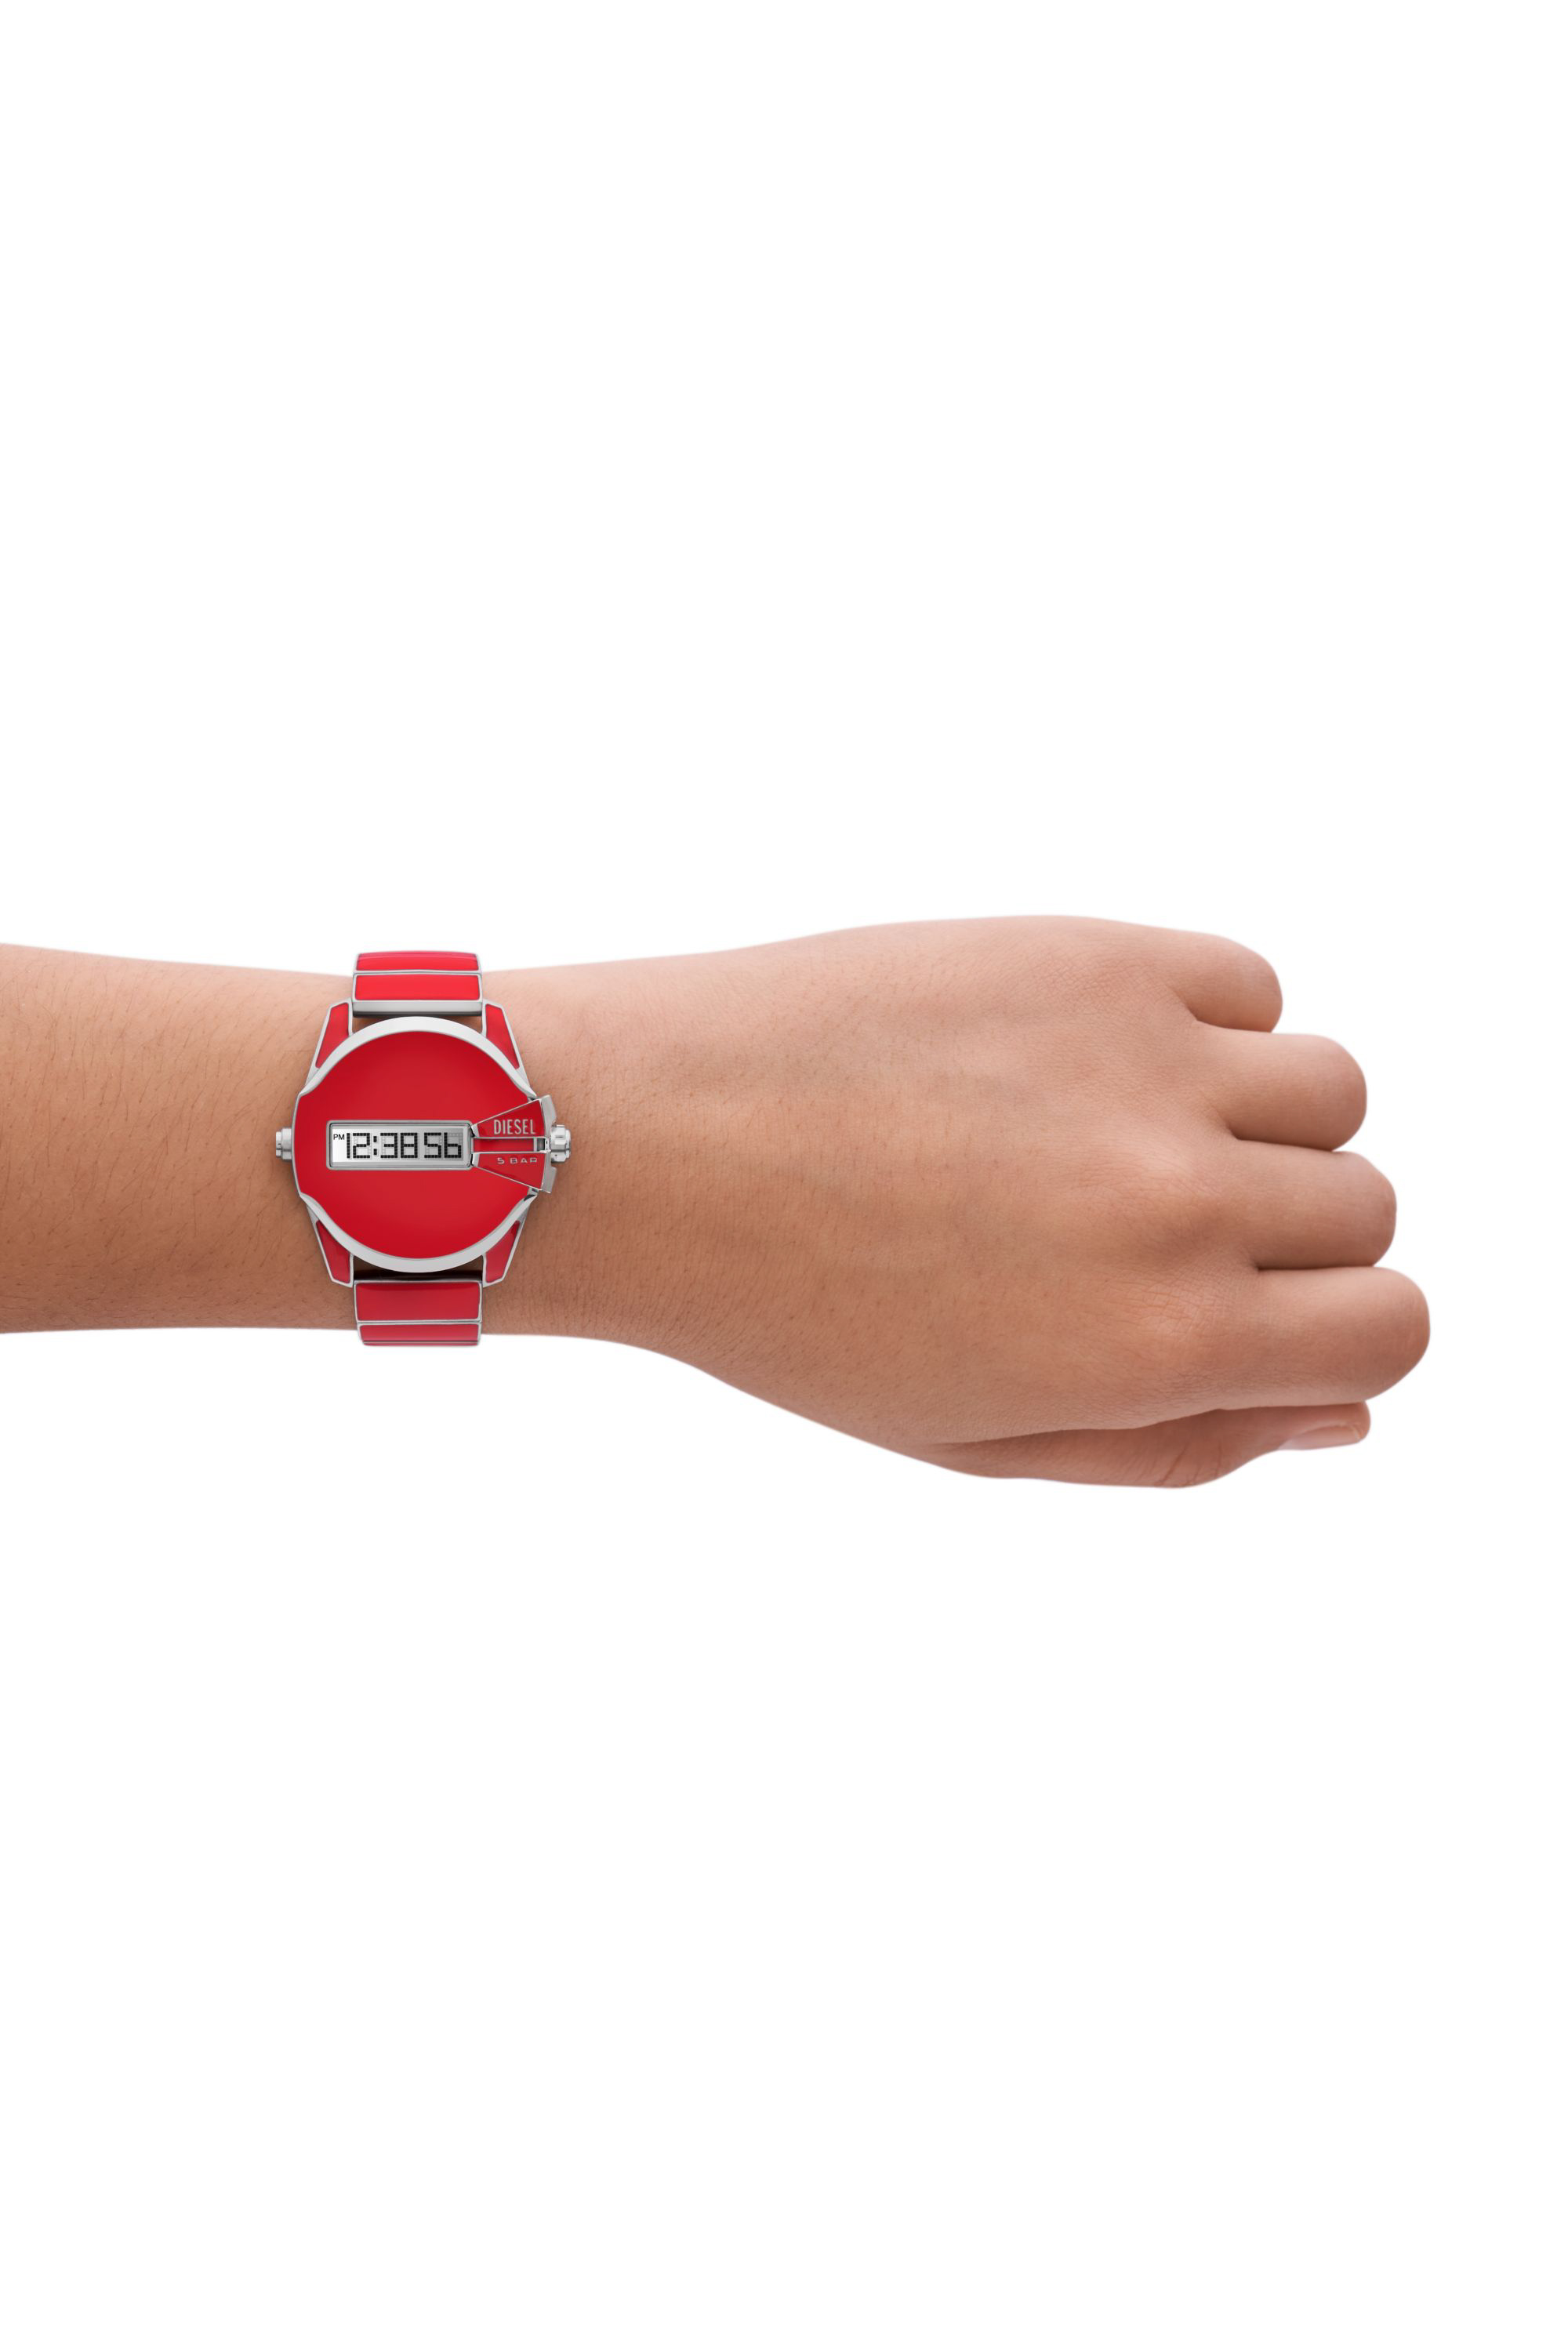 Diesel - DZ2192, Unisex Baby Chief Digital red enamel and stainless steel watch in Red - Image 4